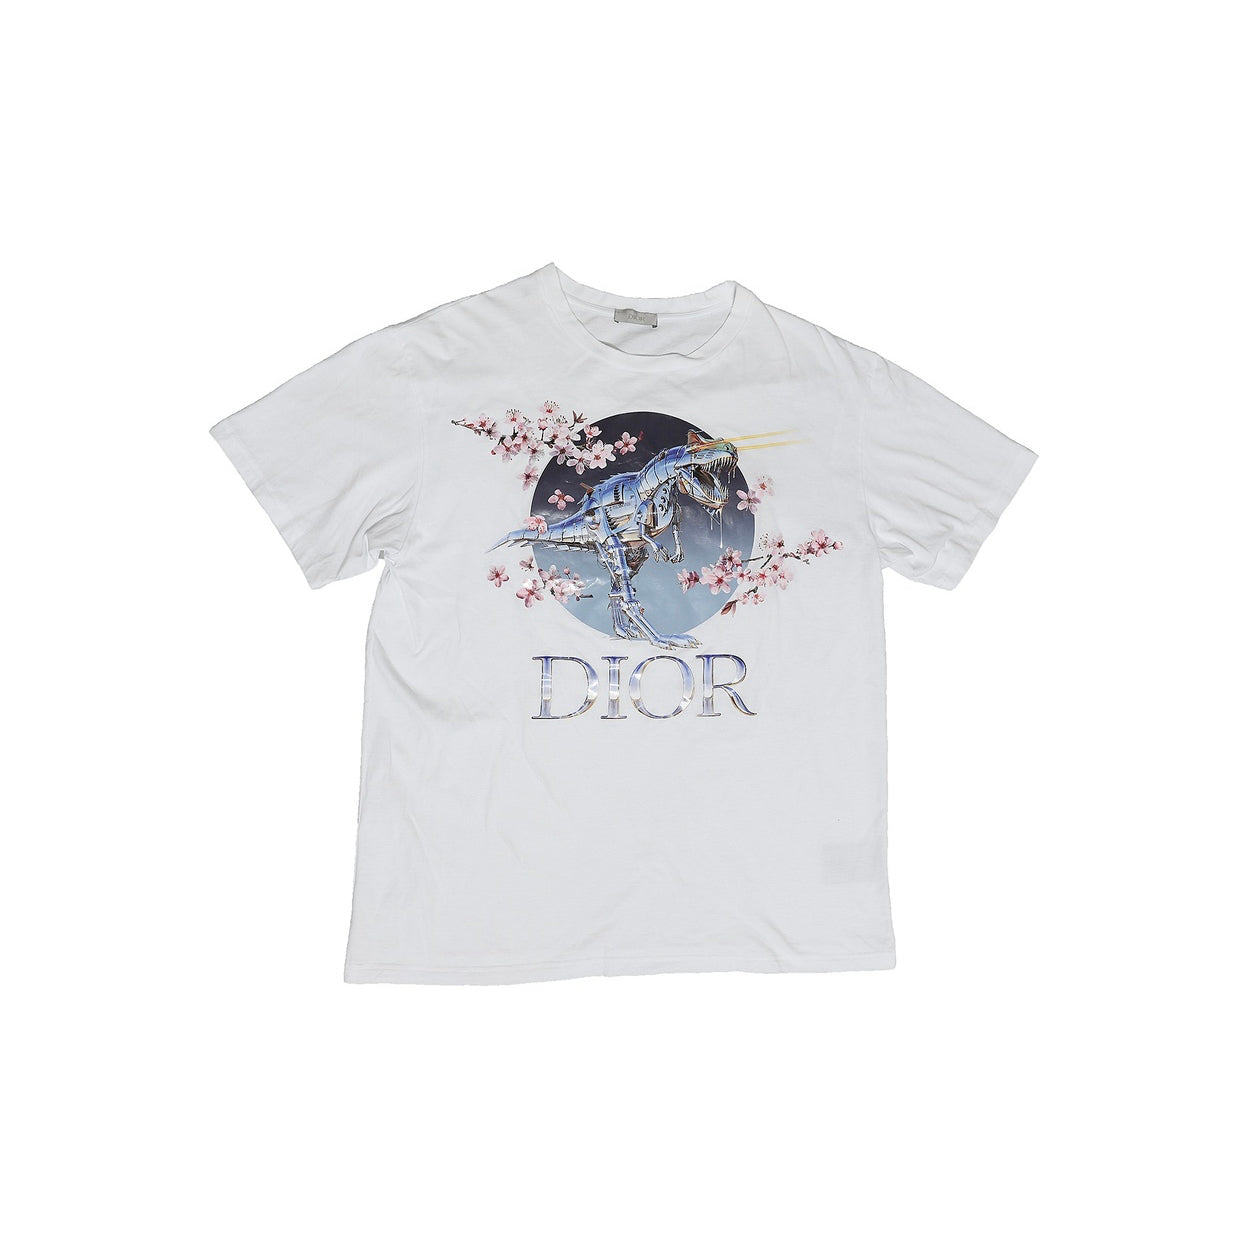  Dior Sorayama Tee  Mens Fashion Tops  Sets Tshirts  Polo Shirts  on Carousell